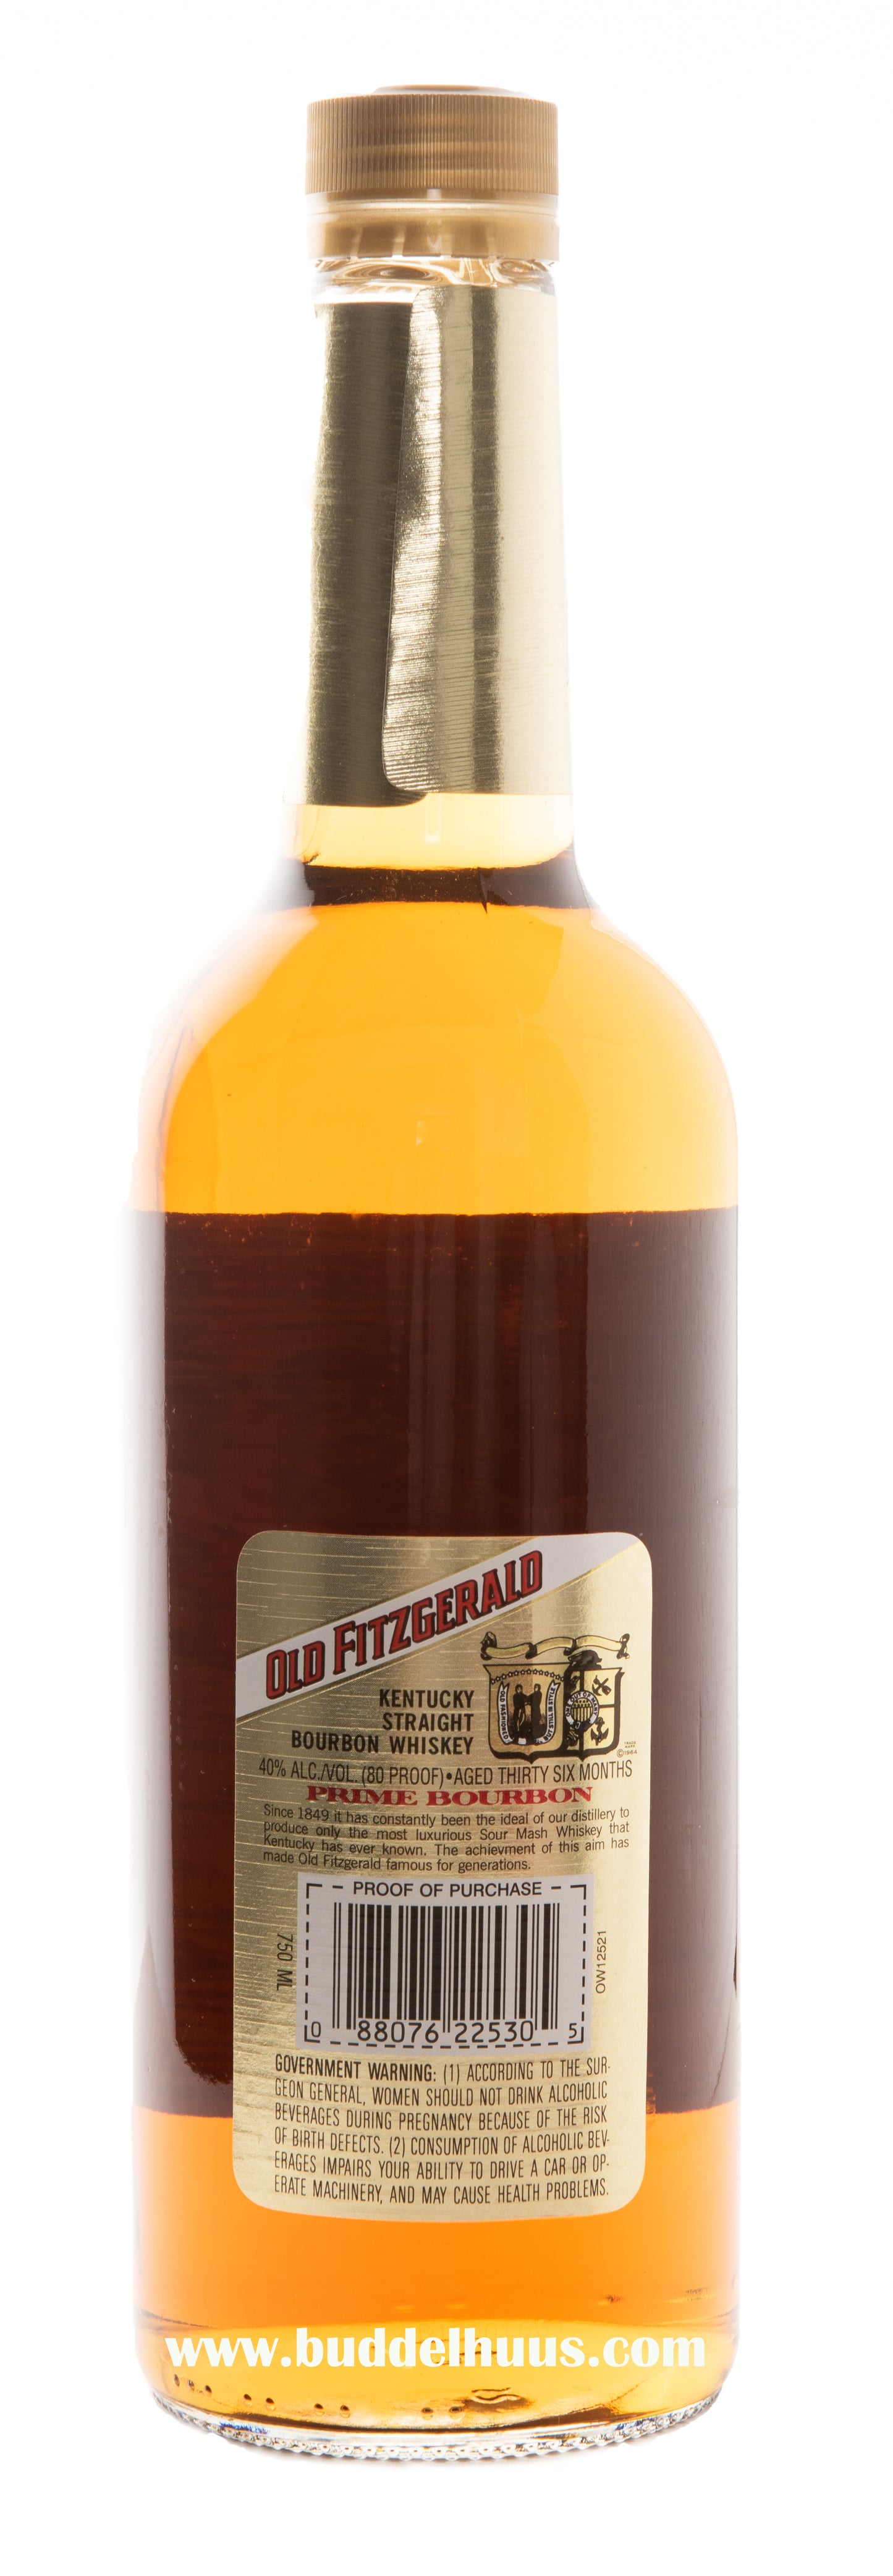 Old Fitzgerald Prime Bourbon